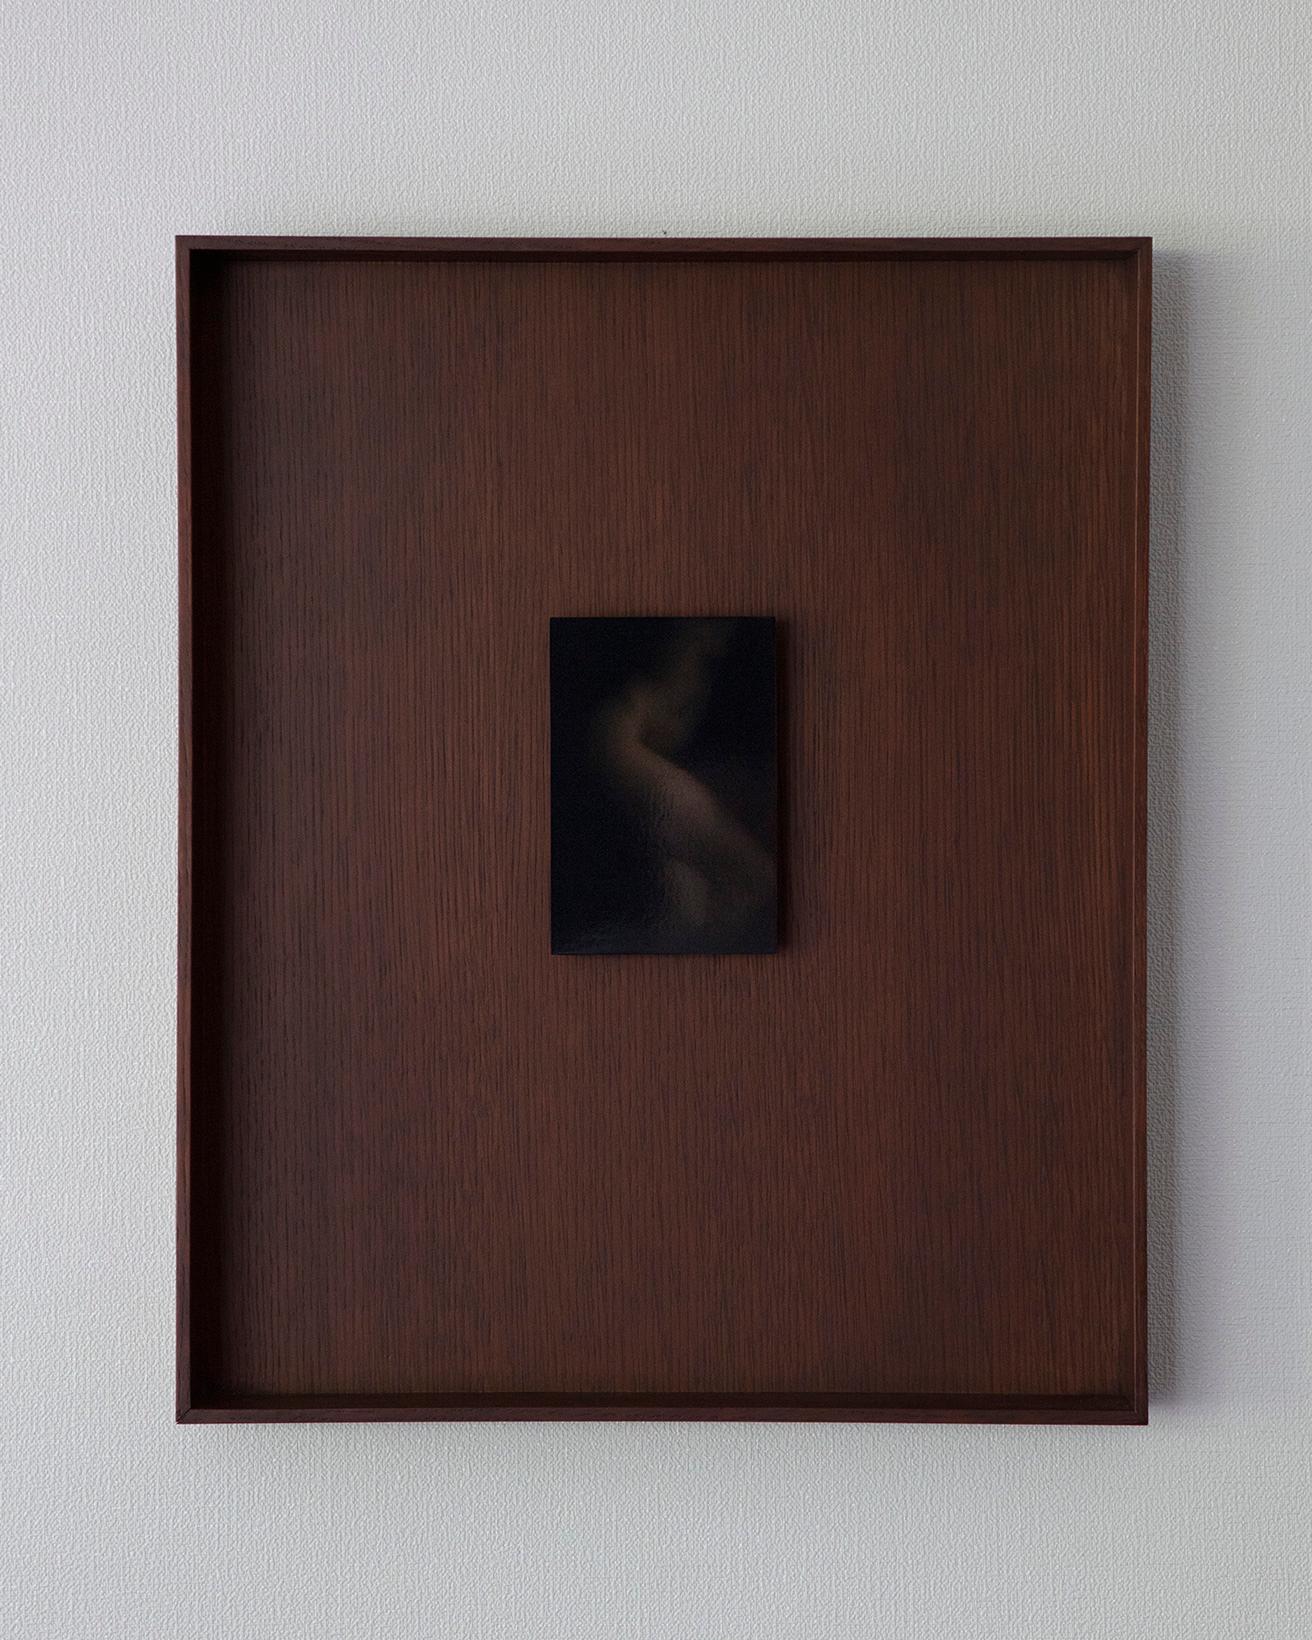 「Māter」 c-print, wood frame (c) Yoshihiko Ueda
45cm×55cmの額に対してプリントサイズは11cm×16.5cmとかなり小さい。
必然的に鑑賞者は近づいてじっと目を凝らすことになる。